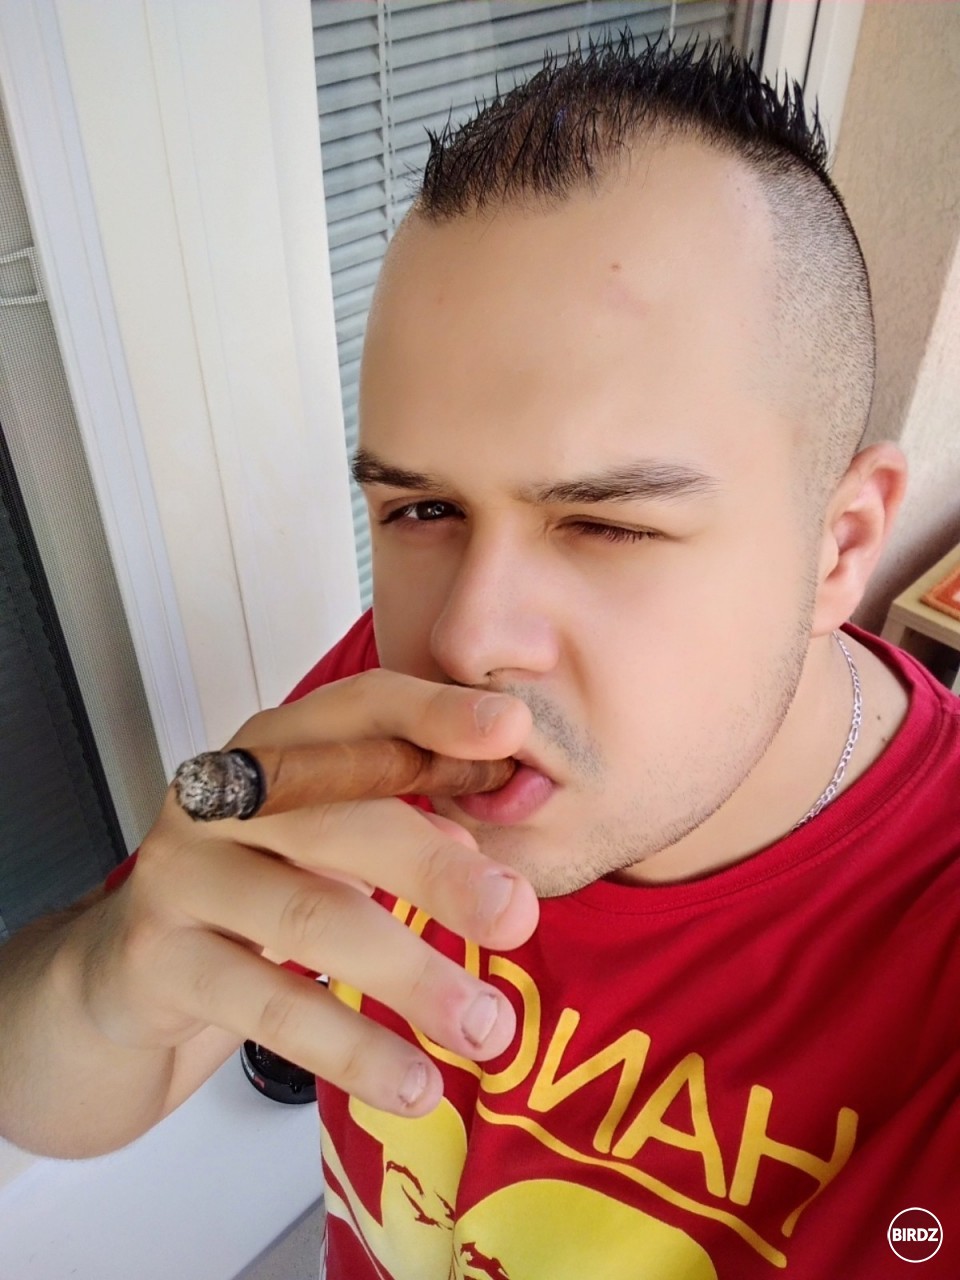 Ked som za mlada fajcil cigary ako Ivan Gasparovic :D